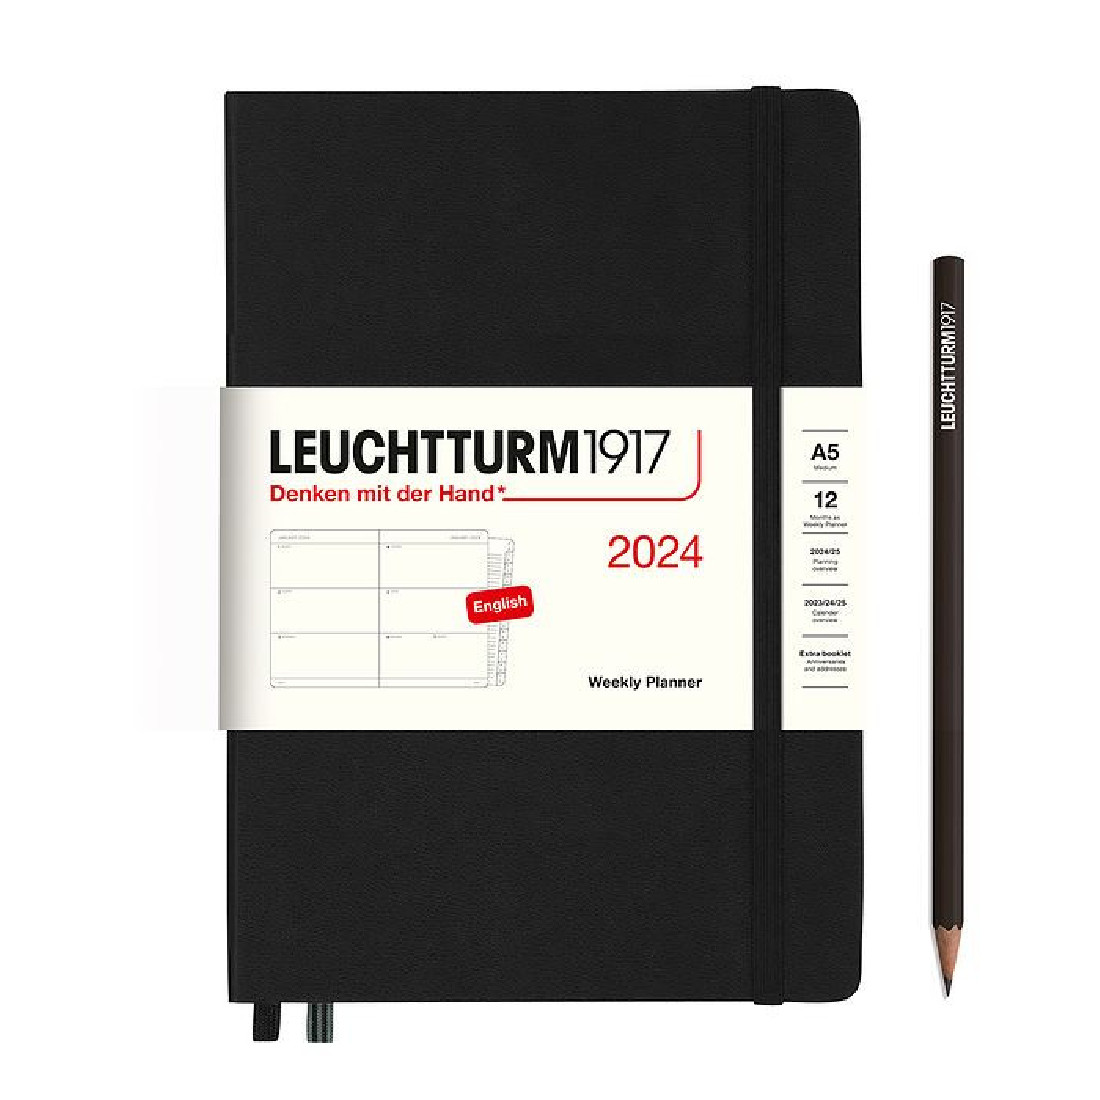 Leuchtturm 1917 Weekly Planner 2024 Black Medium A5 Hard Cover